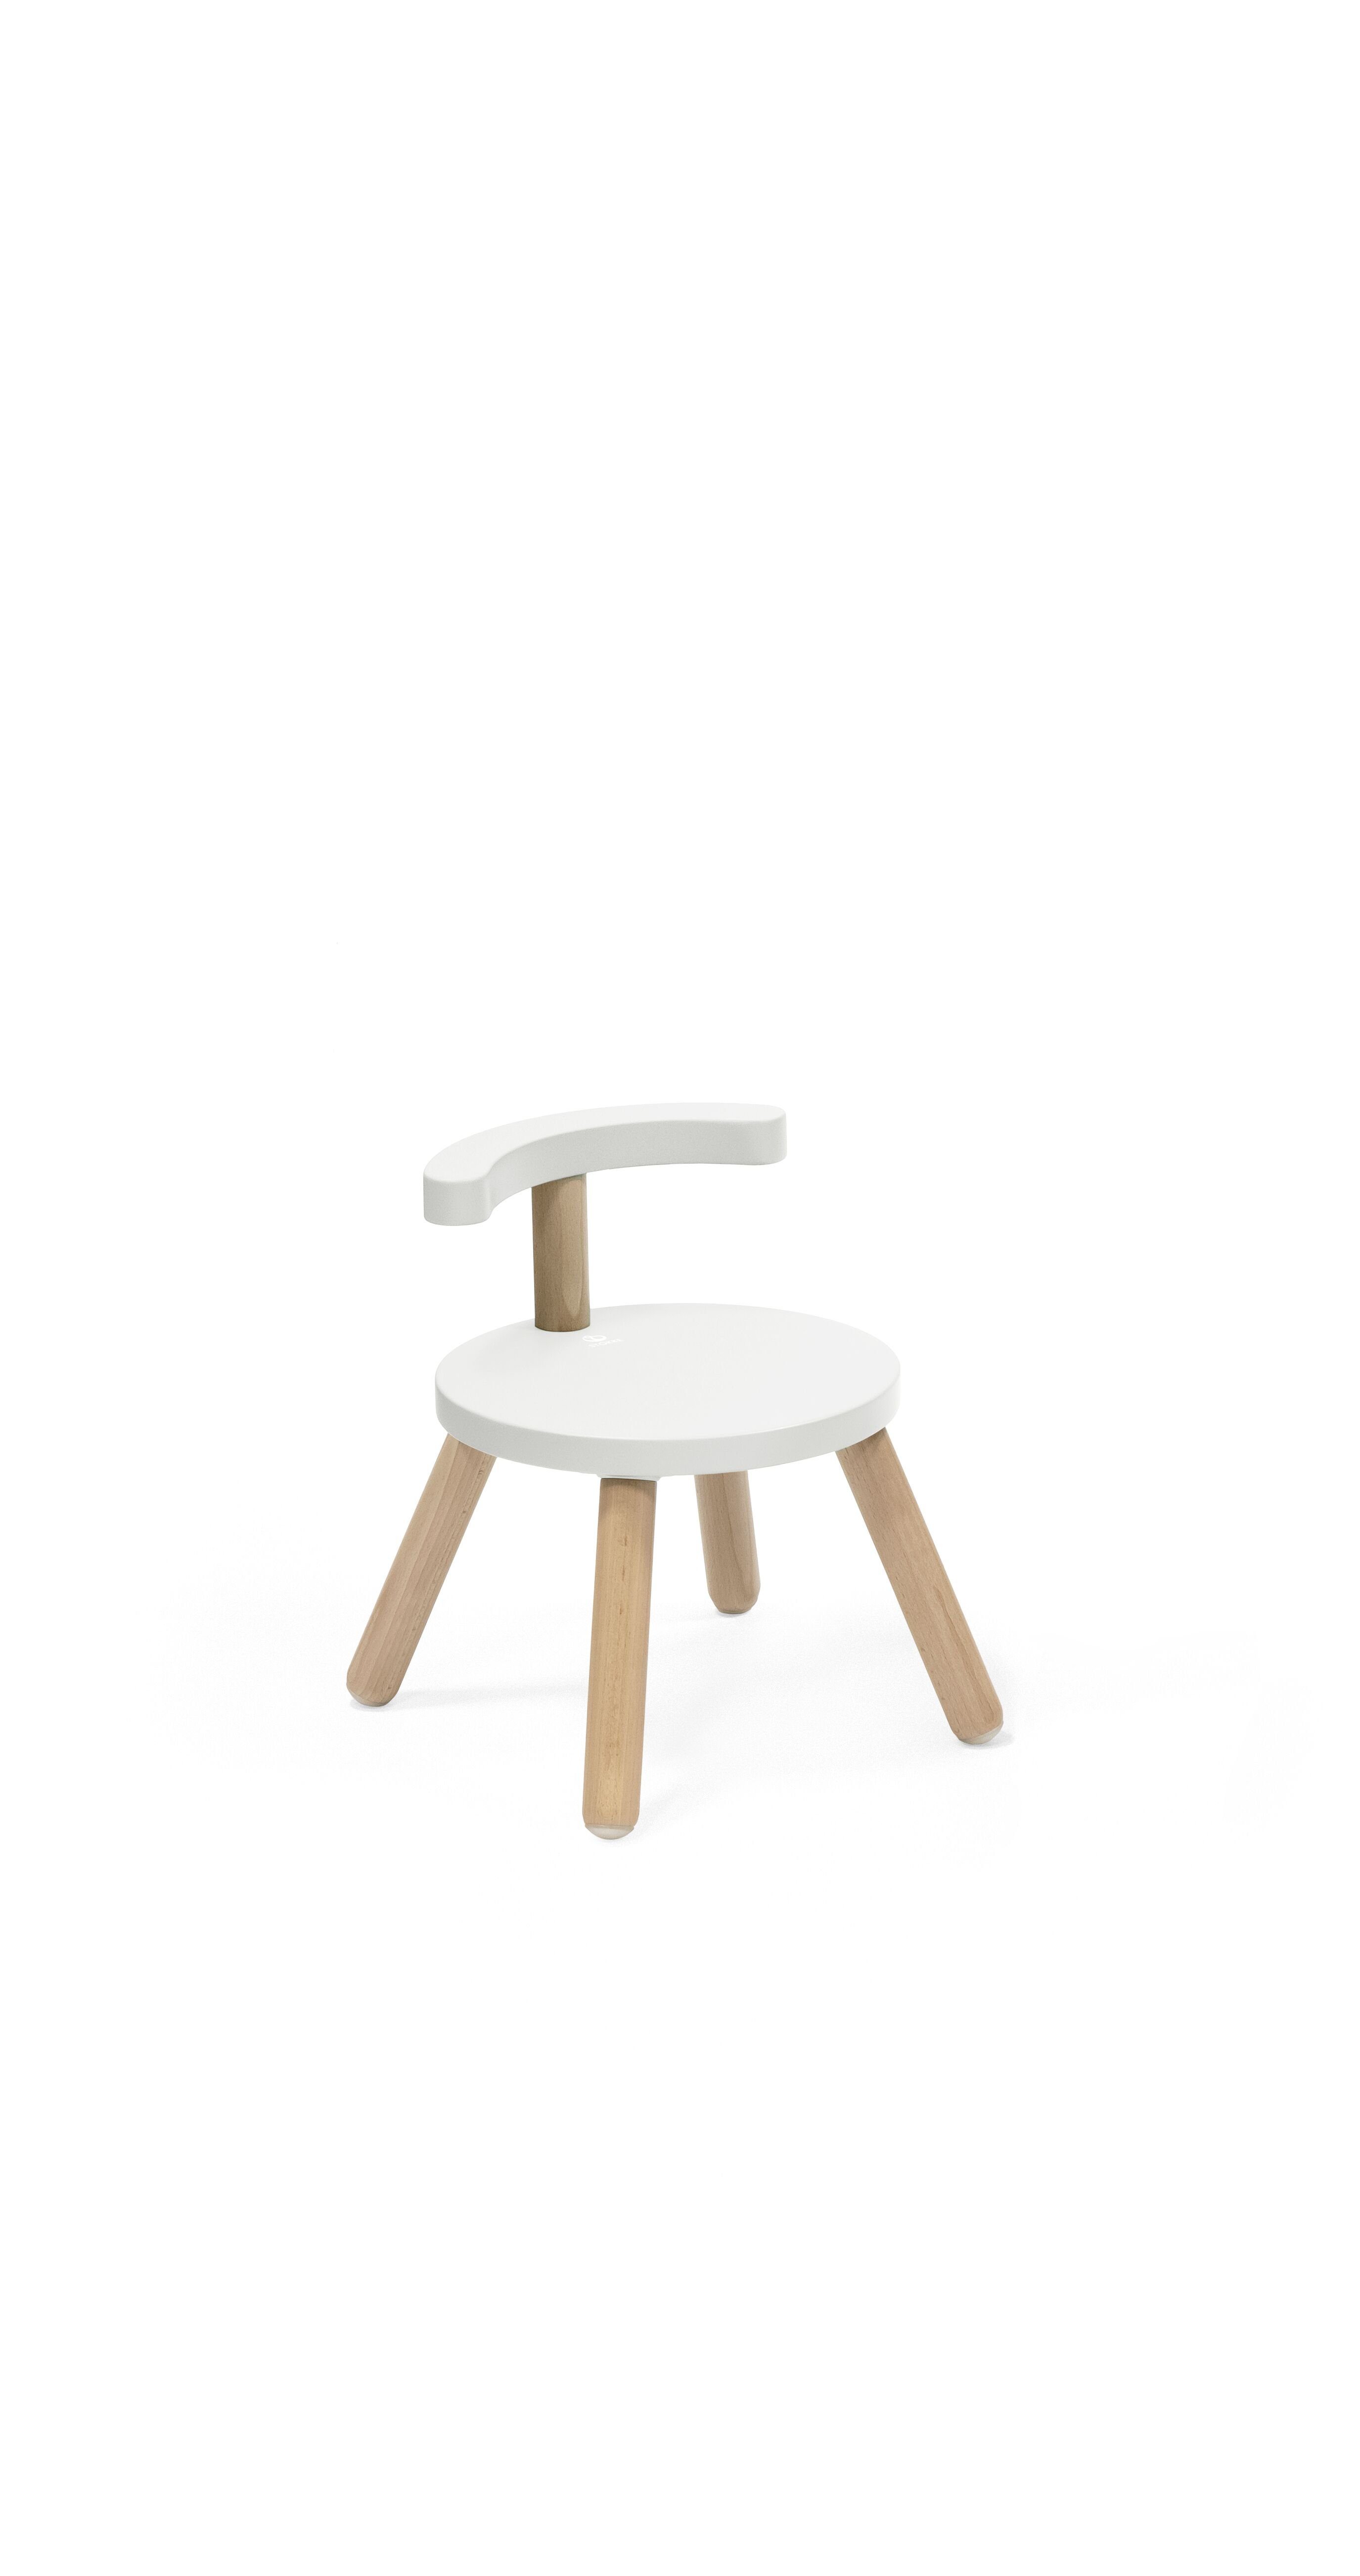 Stokke Kindersitzgruppe dem V2, Sitzhöhe, Spieltisch mit White Stokke® MuTable™ Mit kompatibel​ Kinderstuhl Stuhl flexibler MuTable™